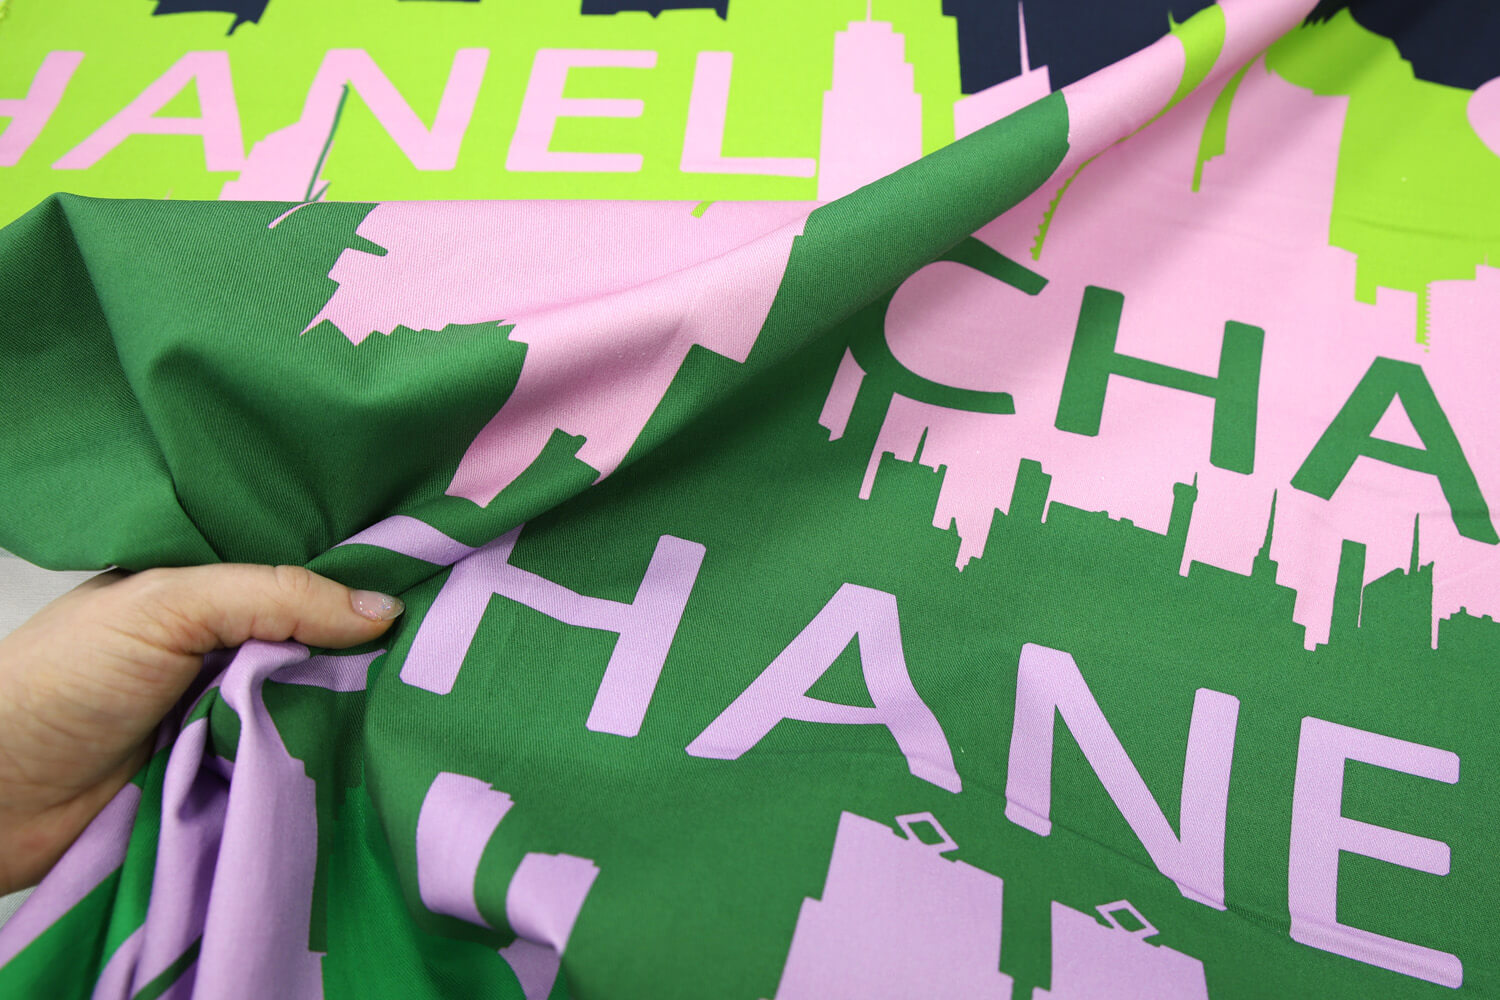 Джинса с эластан Chanel, цвет Зеленый, фото 1